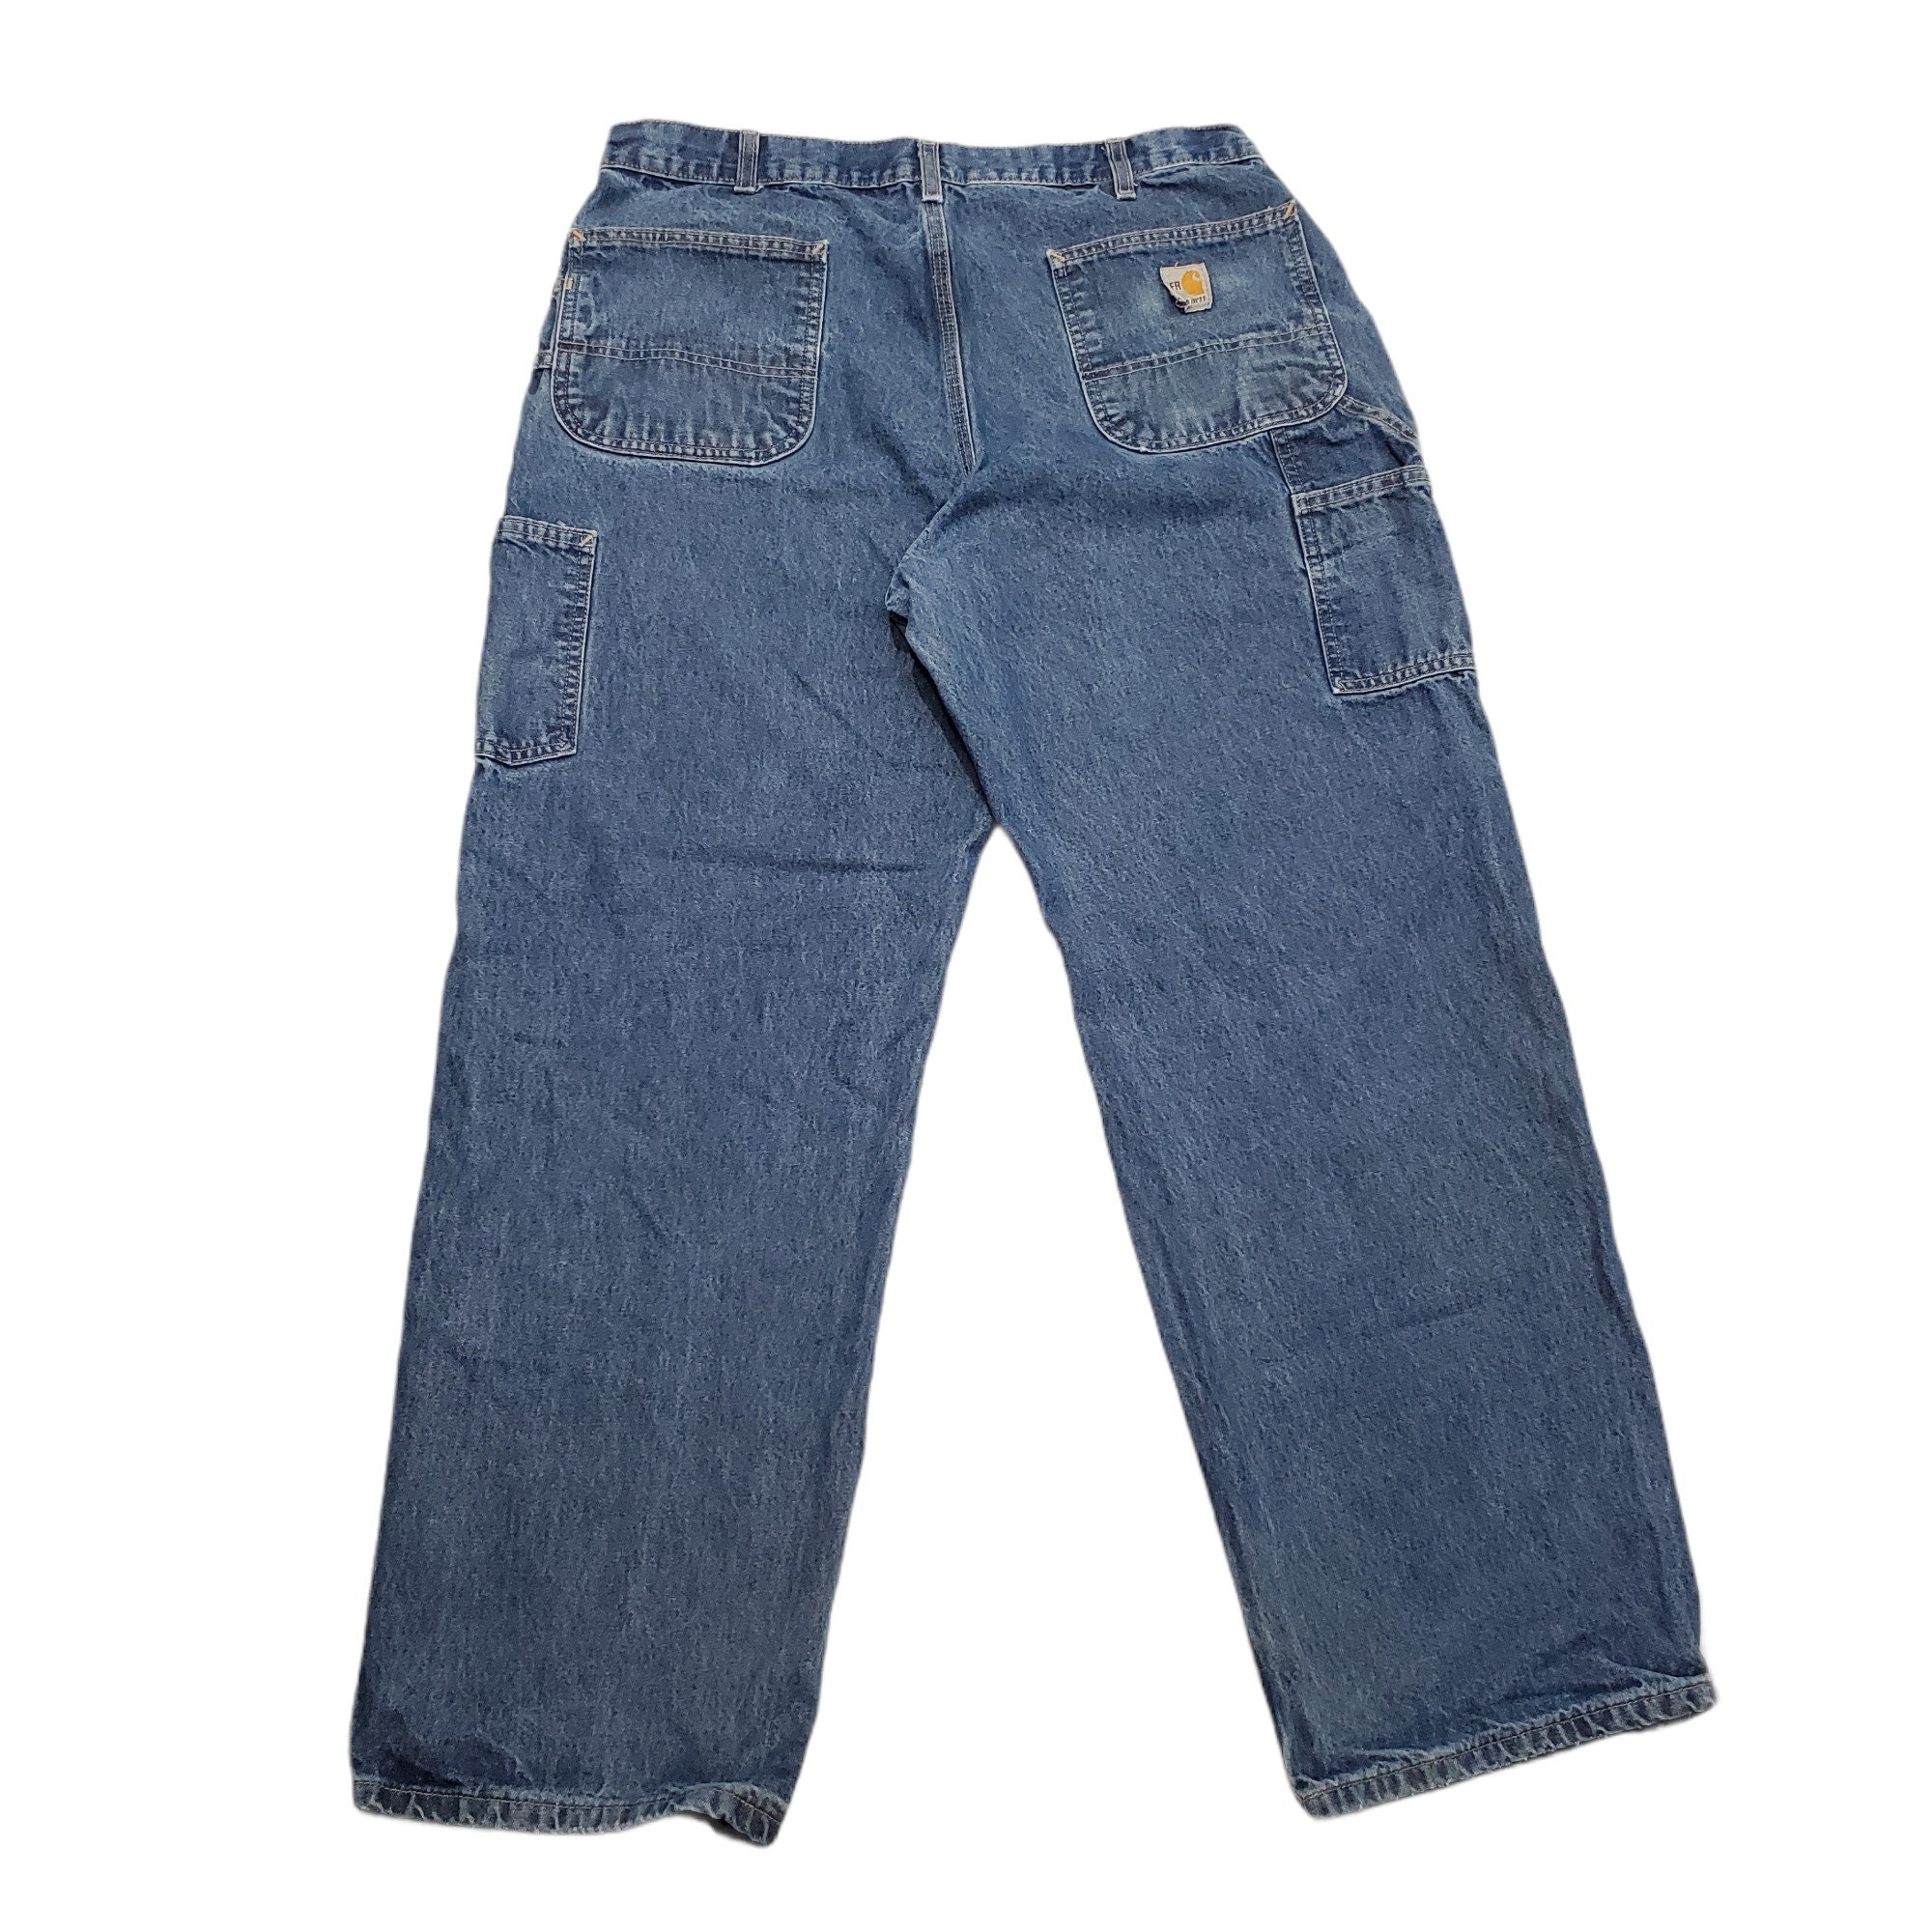 Lot of 3 Carhartt Men's Carpenter Pants Khaki Jeans Size | Etsy